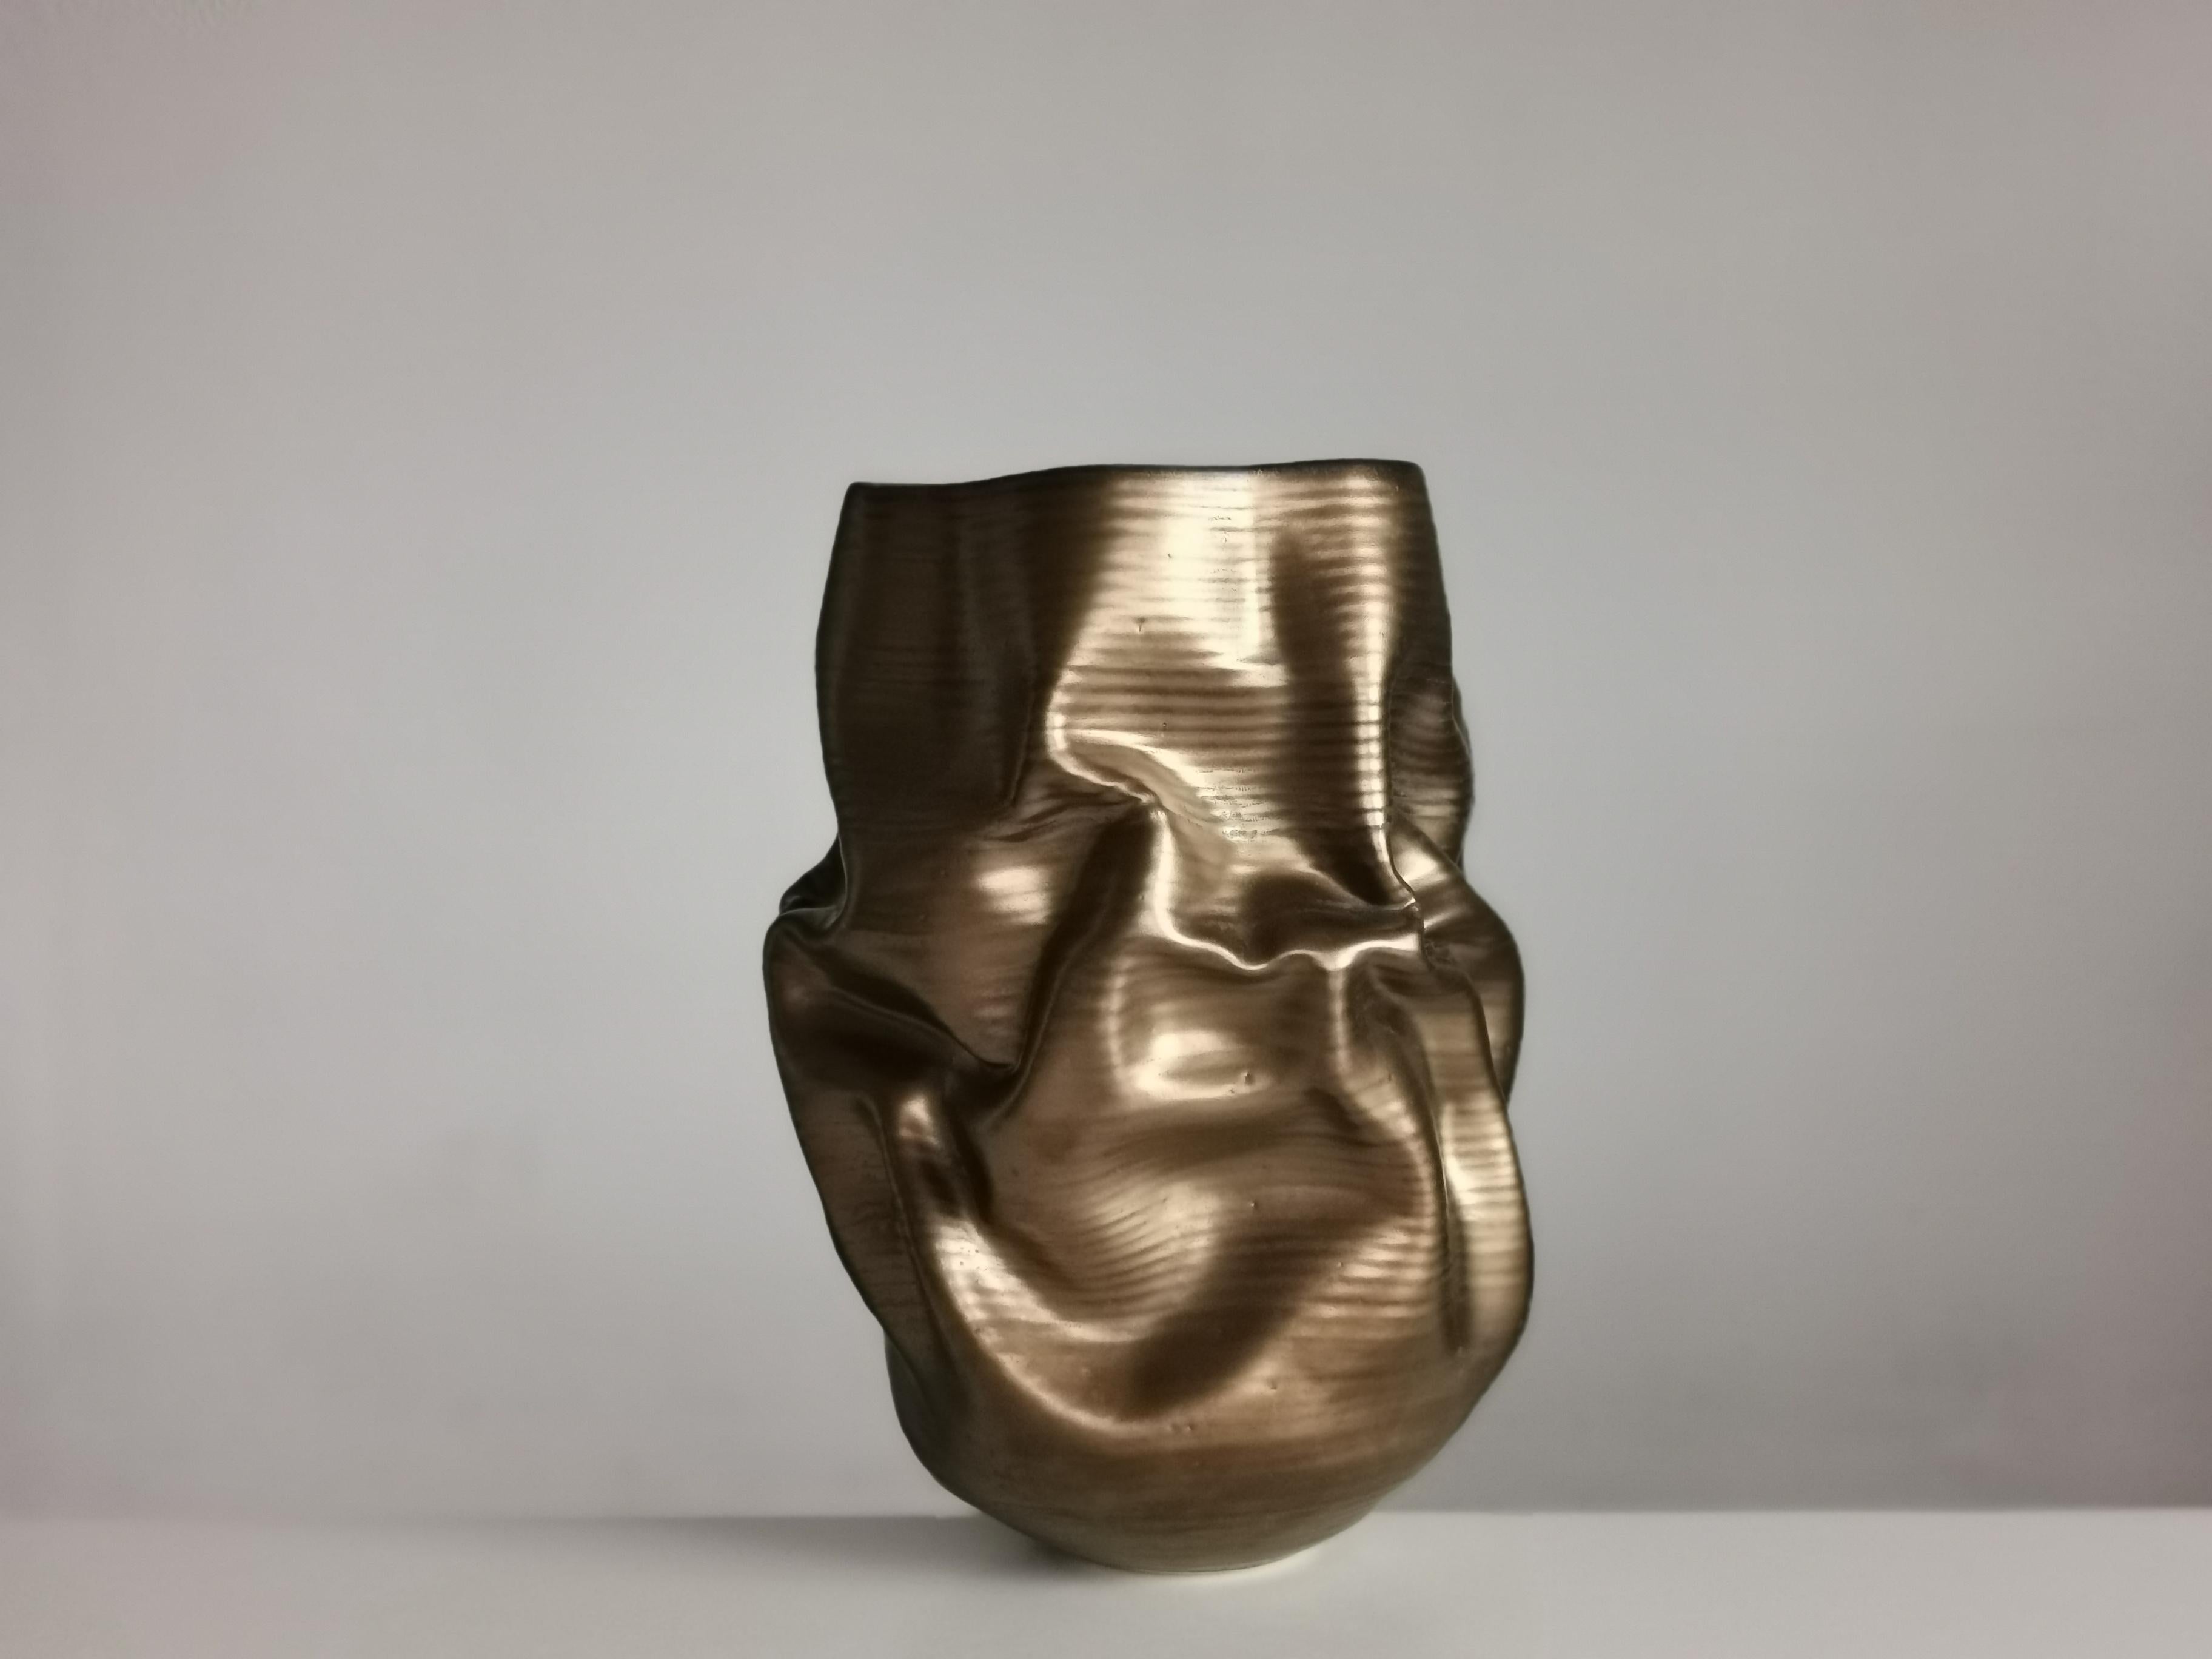 Gold Crumpled Form, Unique Ceramic Sculpture Vessel N.76 2